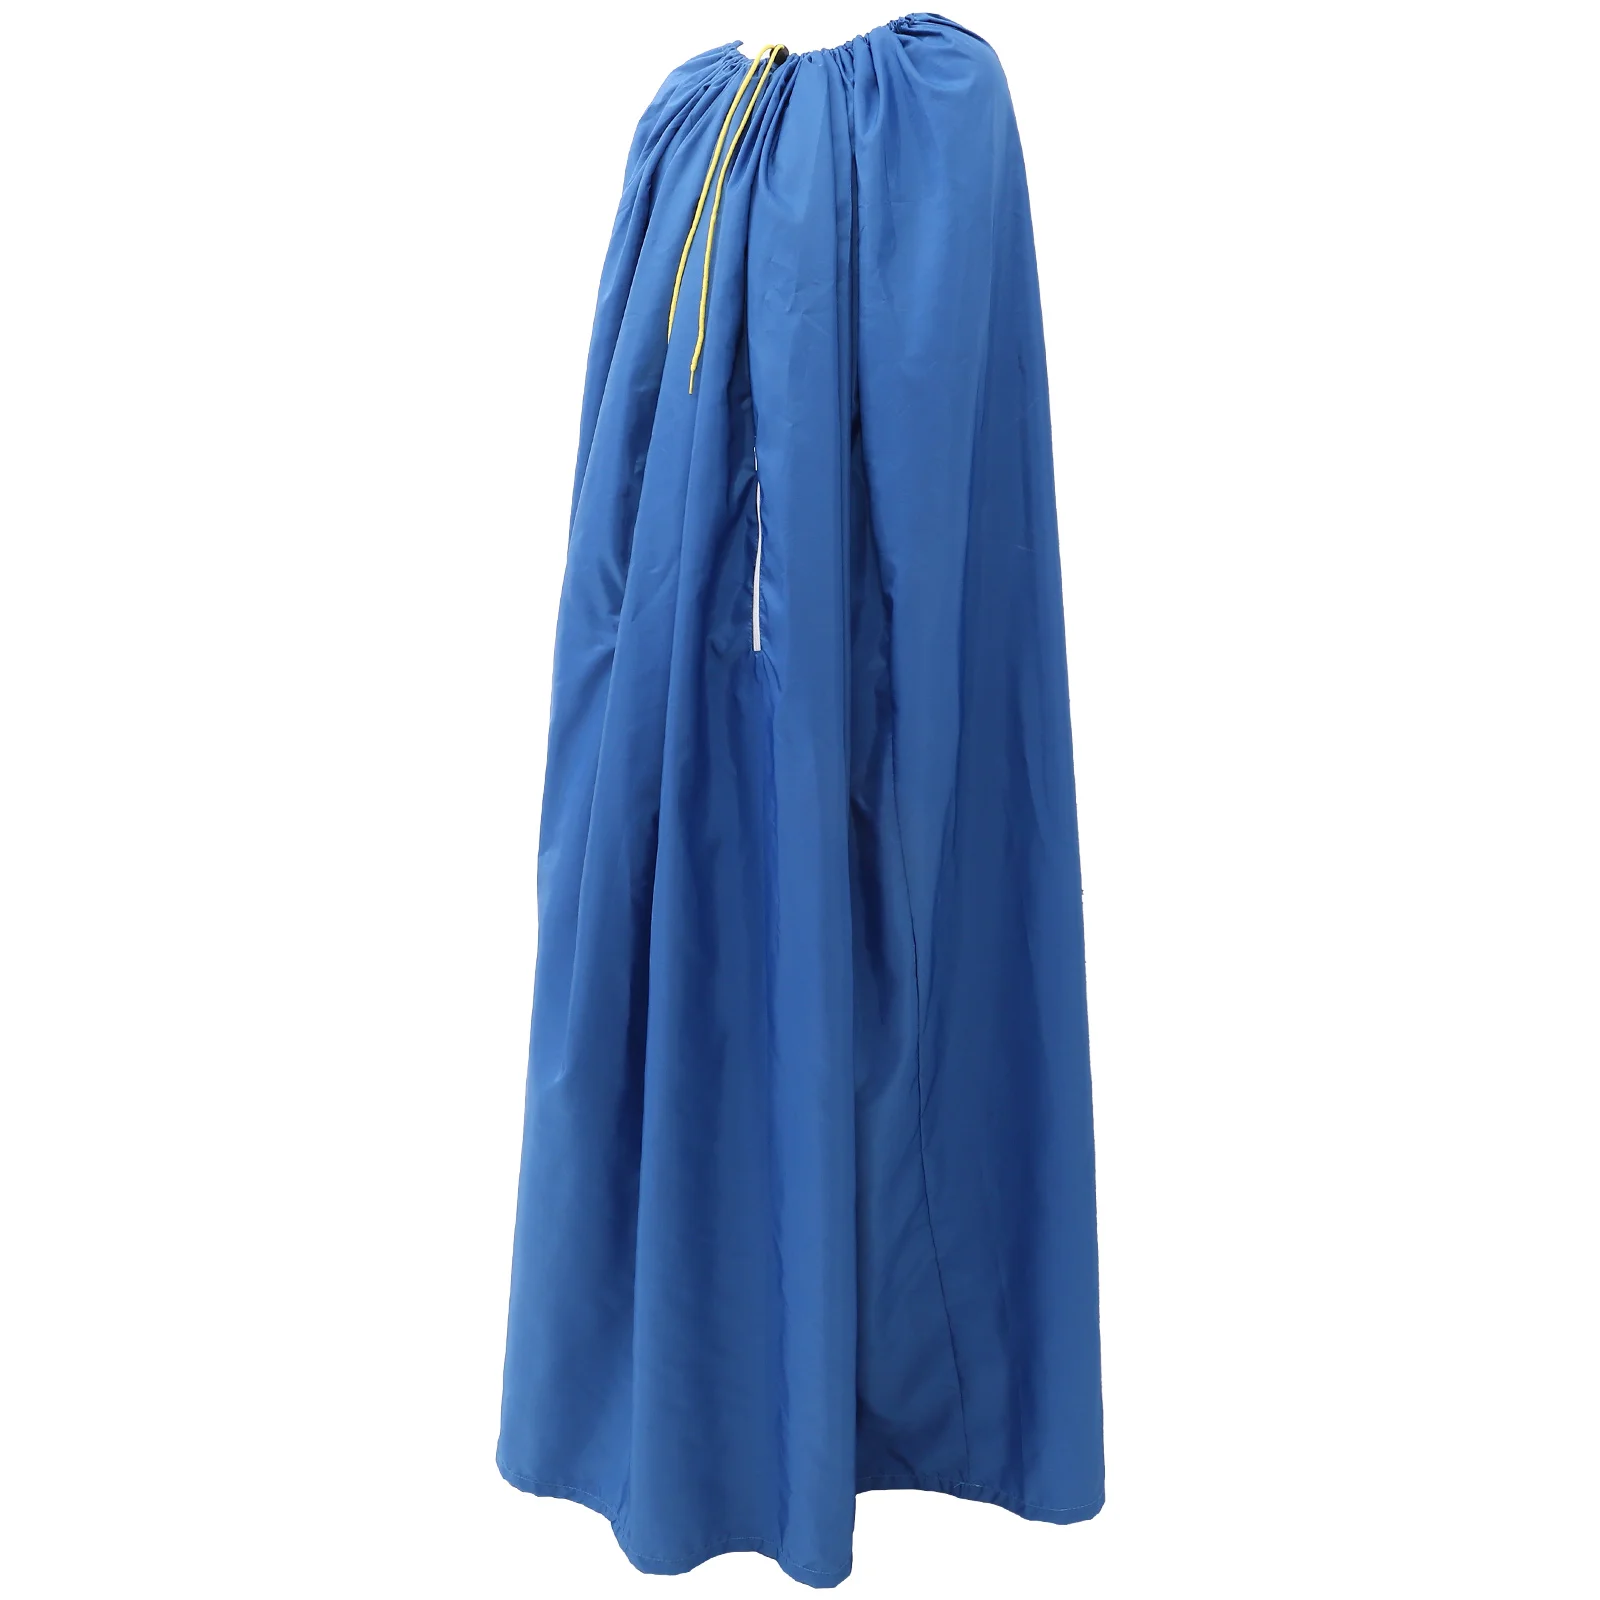 

Steam Gown Sauna Steam Cloak Full Body Covering Bath Robe Spa Fumigation Robe